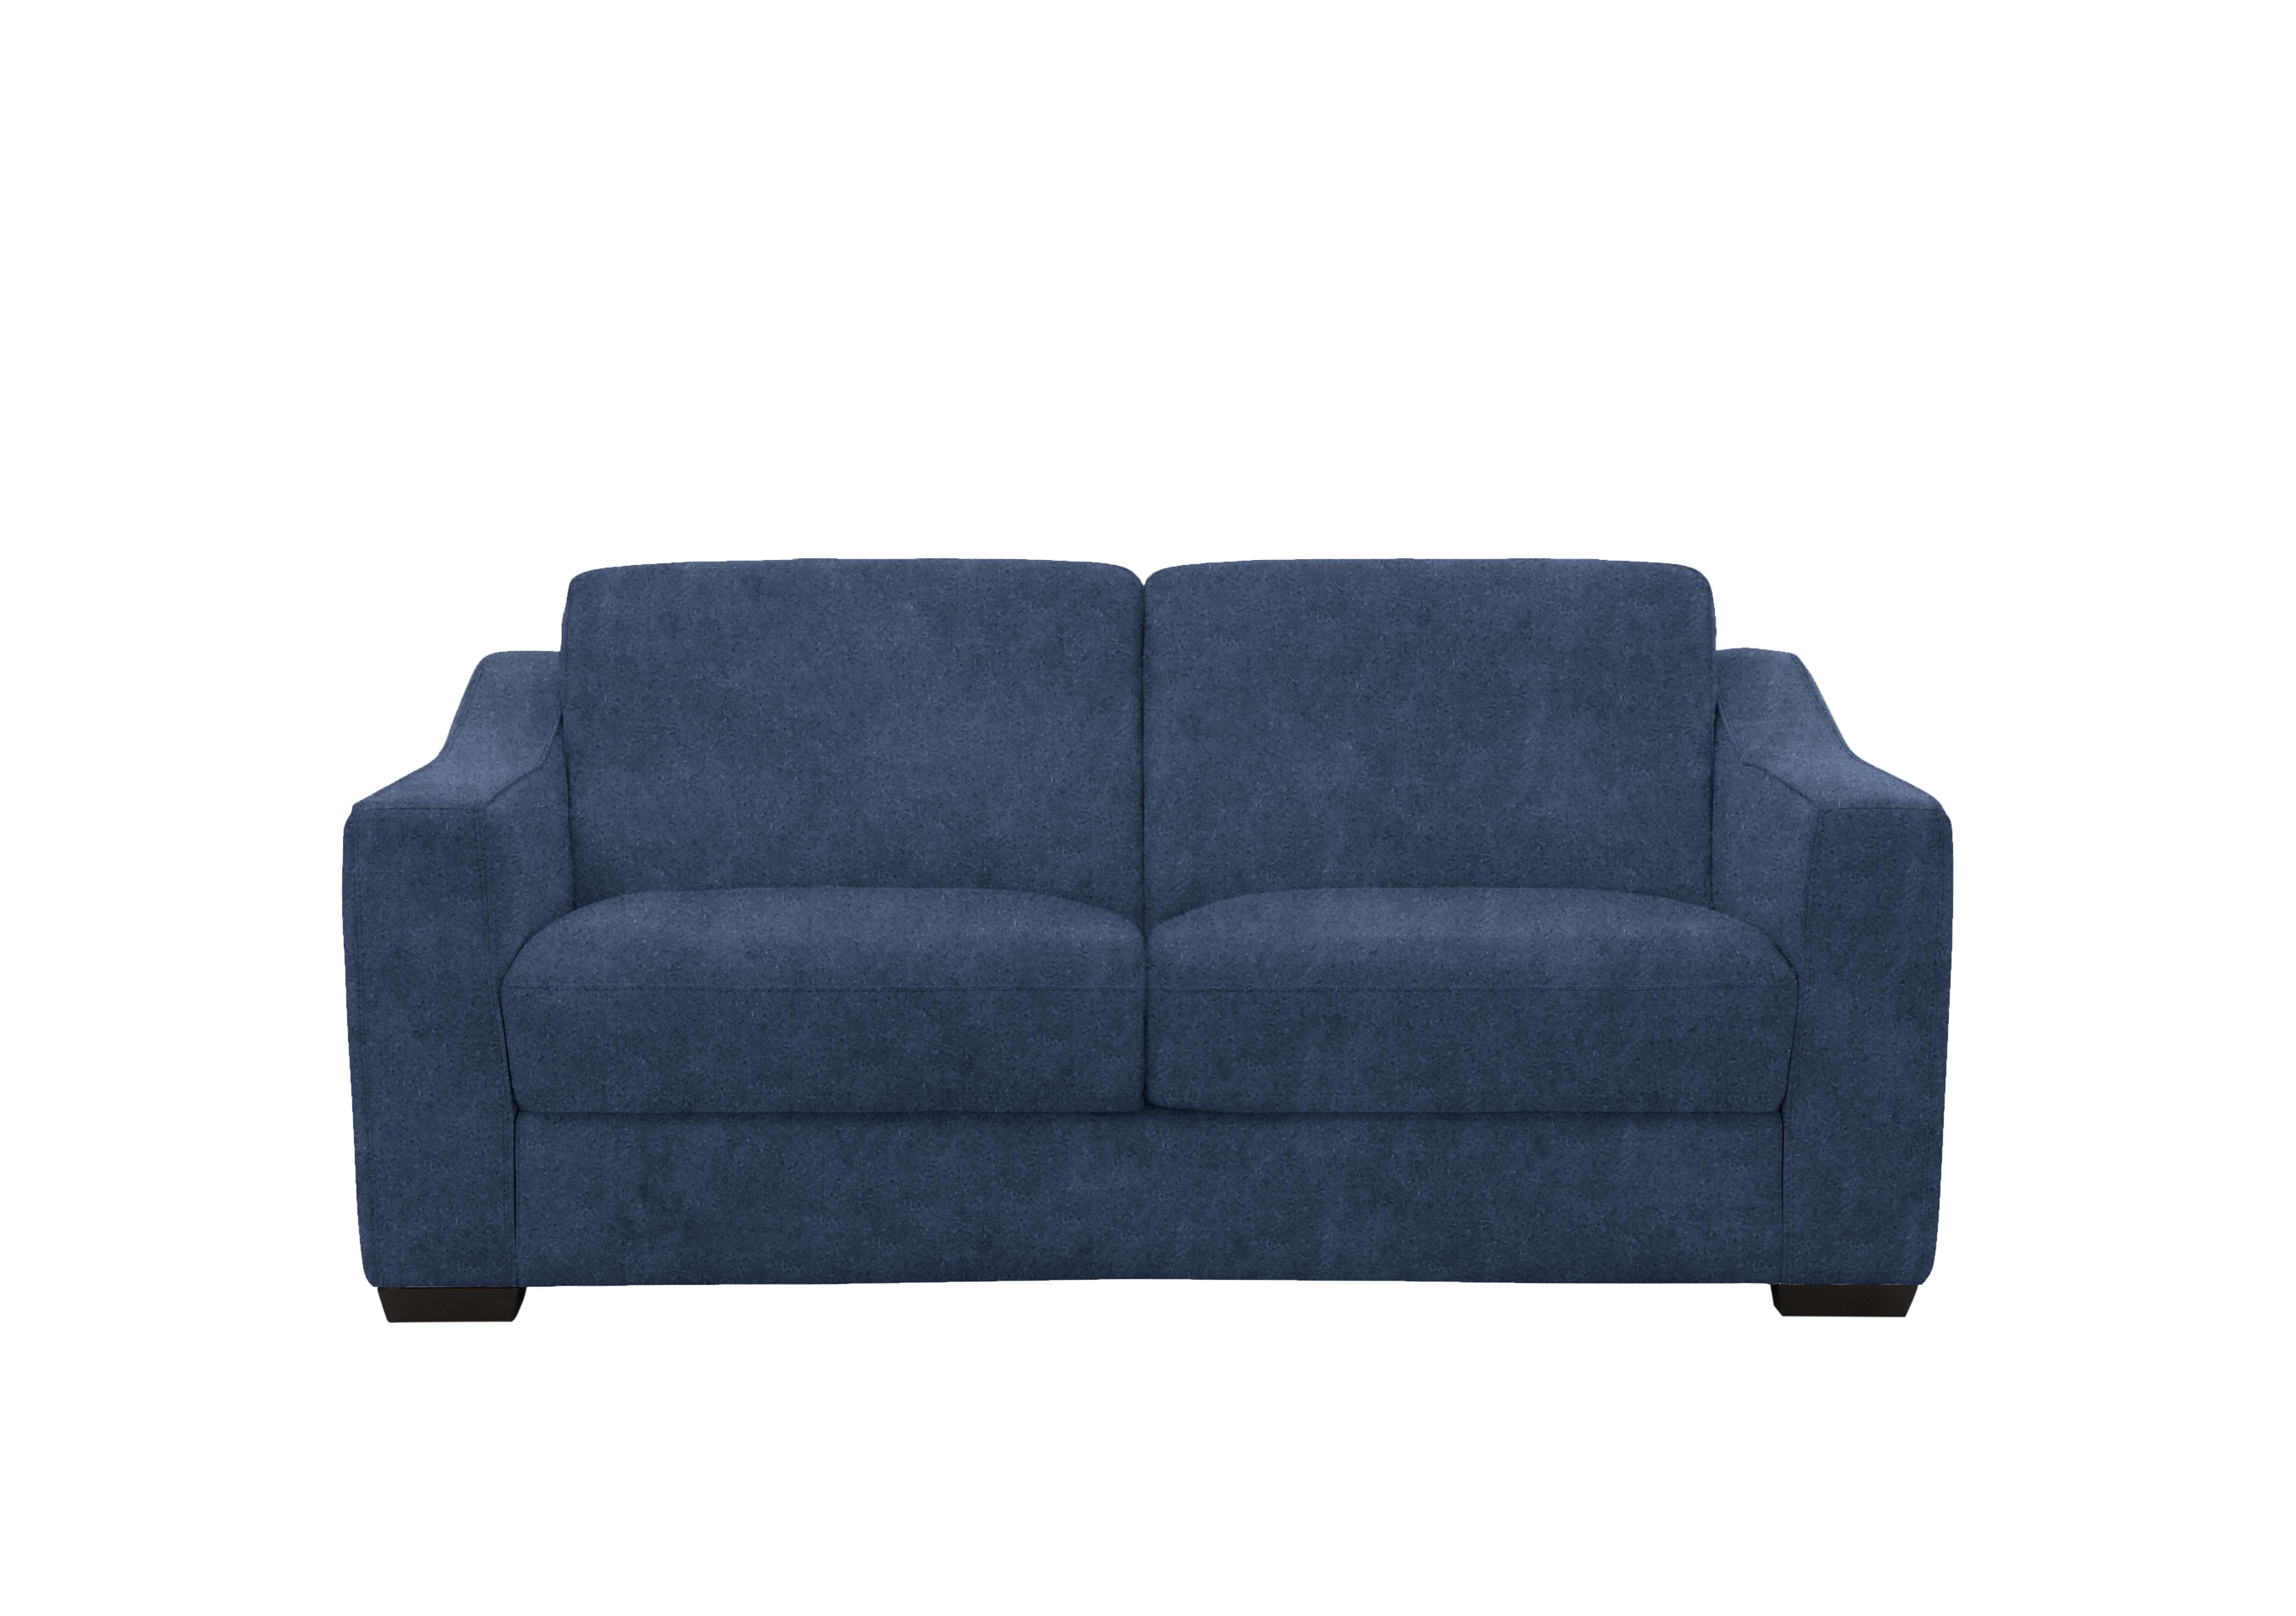 Optimus 2 Seater Fabric Sofa in Bfa-Blj-R10 Blue on Furniture Village